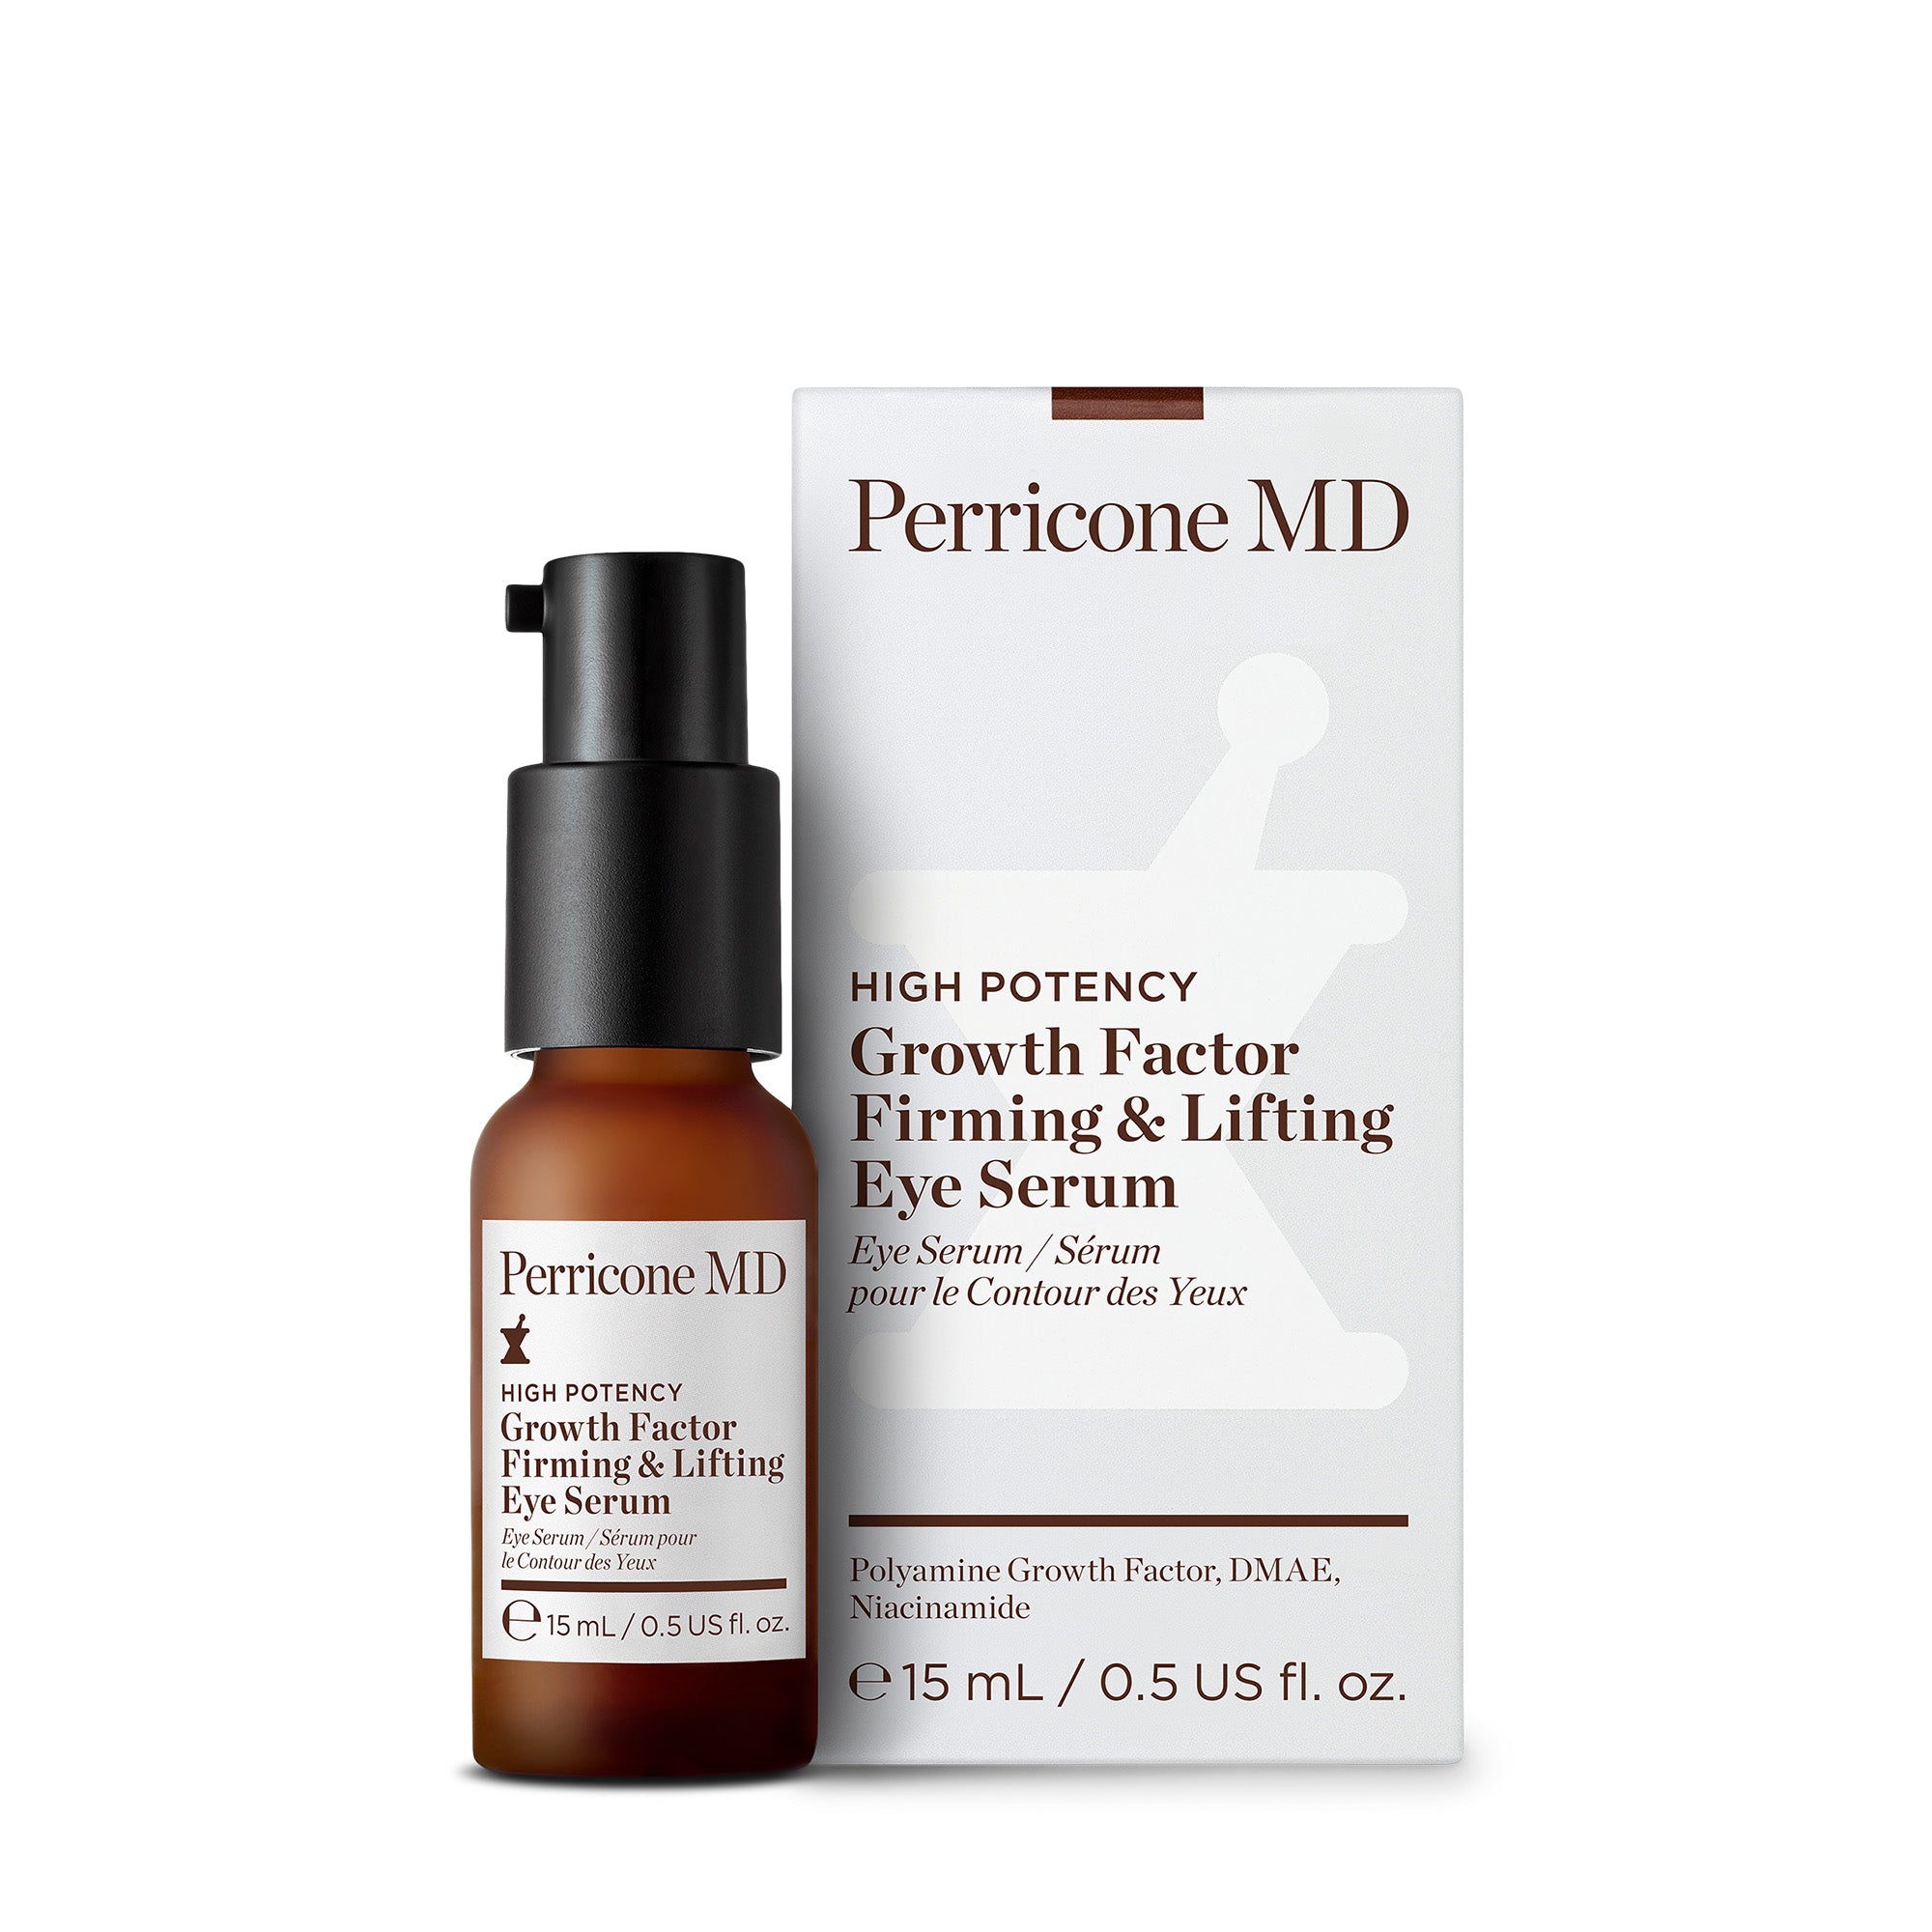 Perricone MD High Potency Growth Factor Firming & Lifting Eye Serum / 0.5OZ